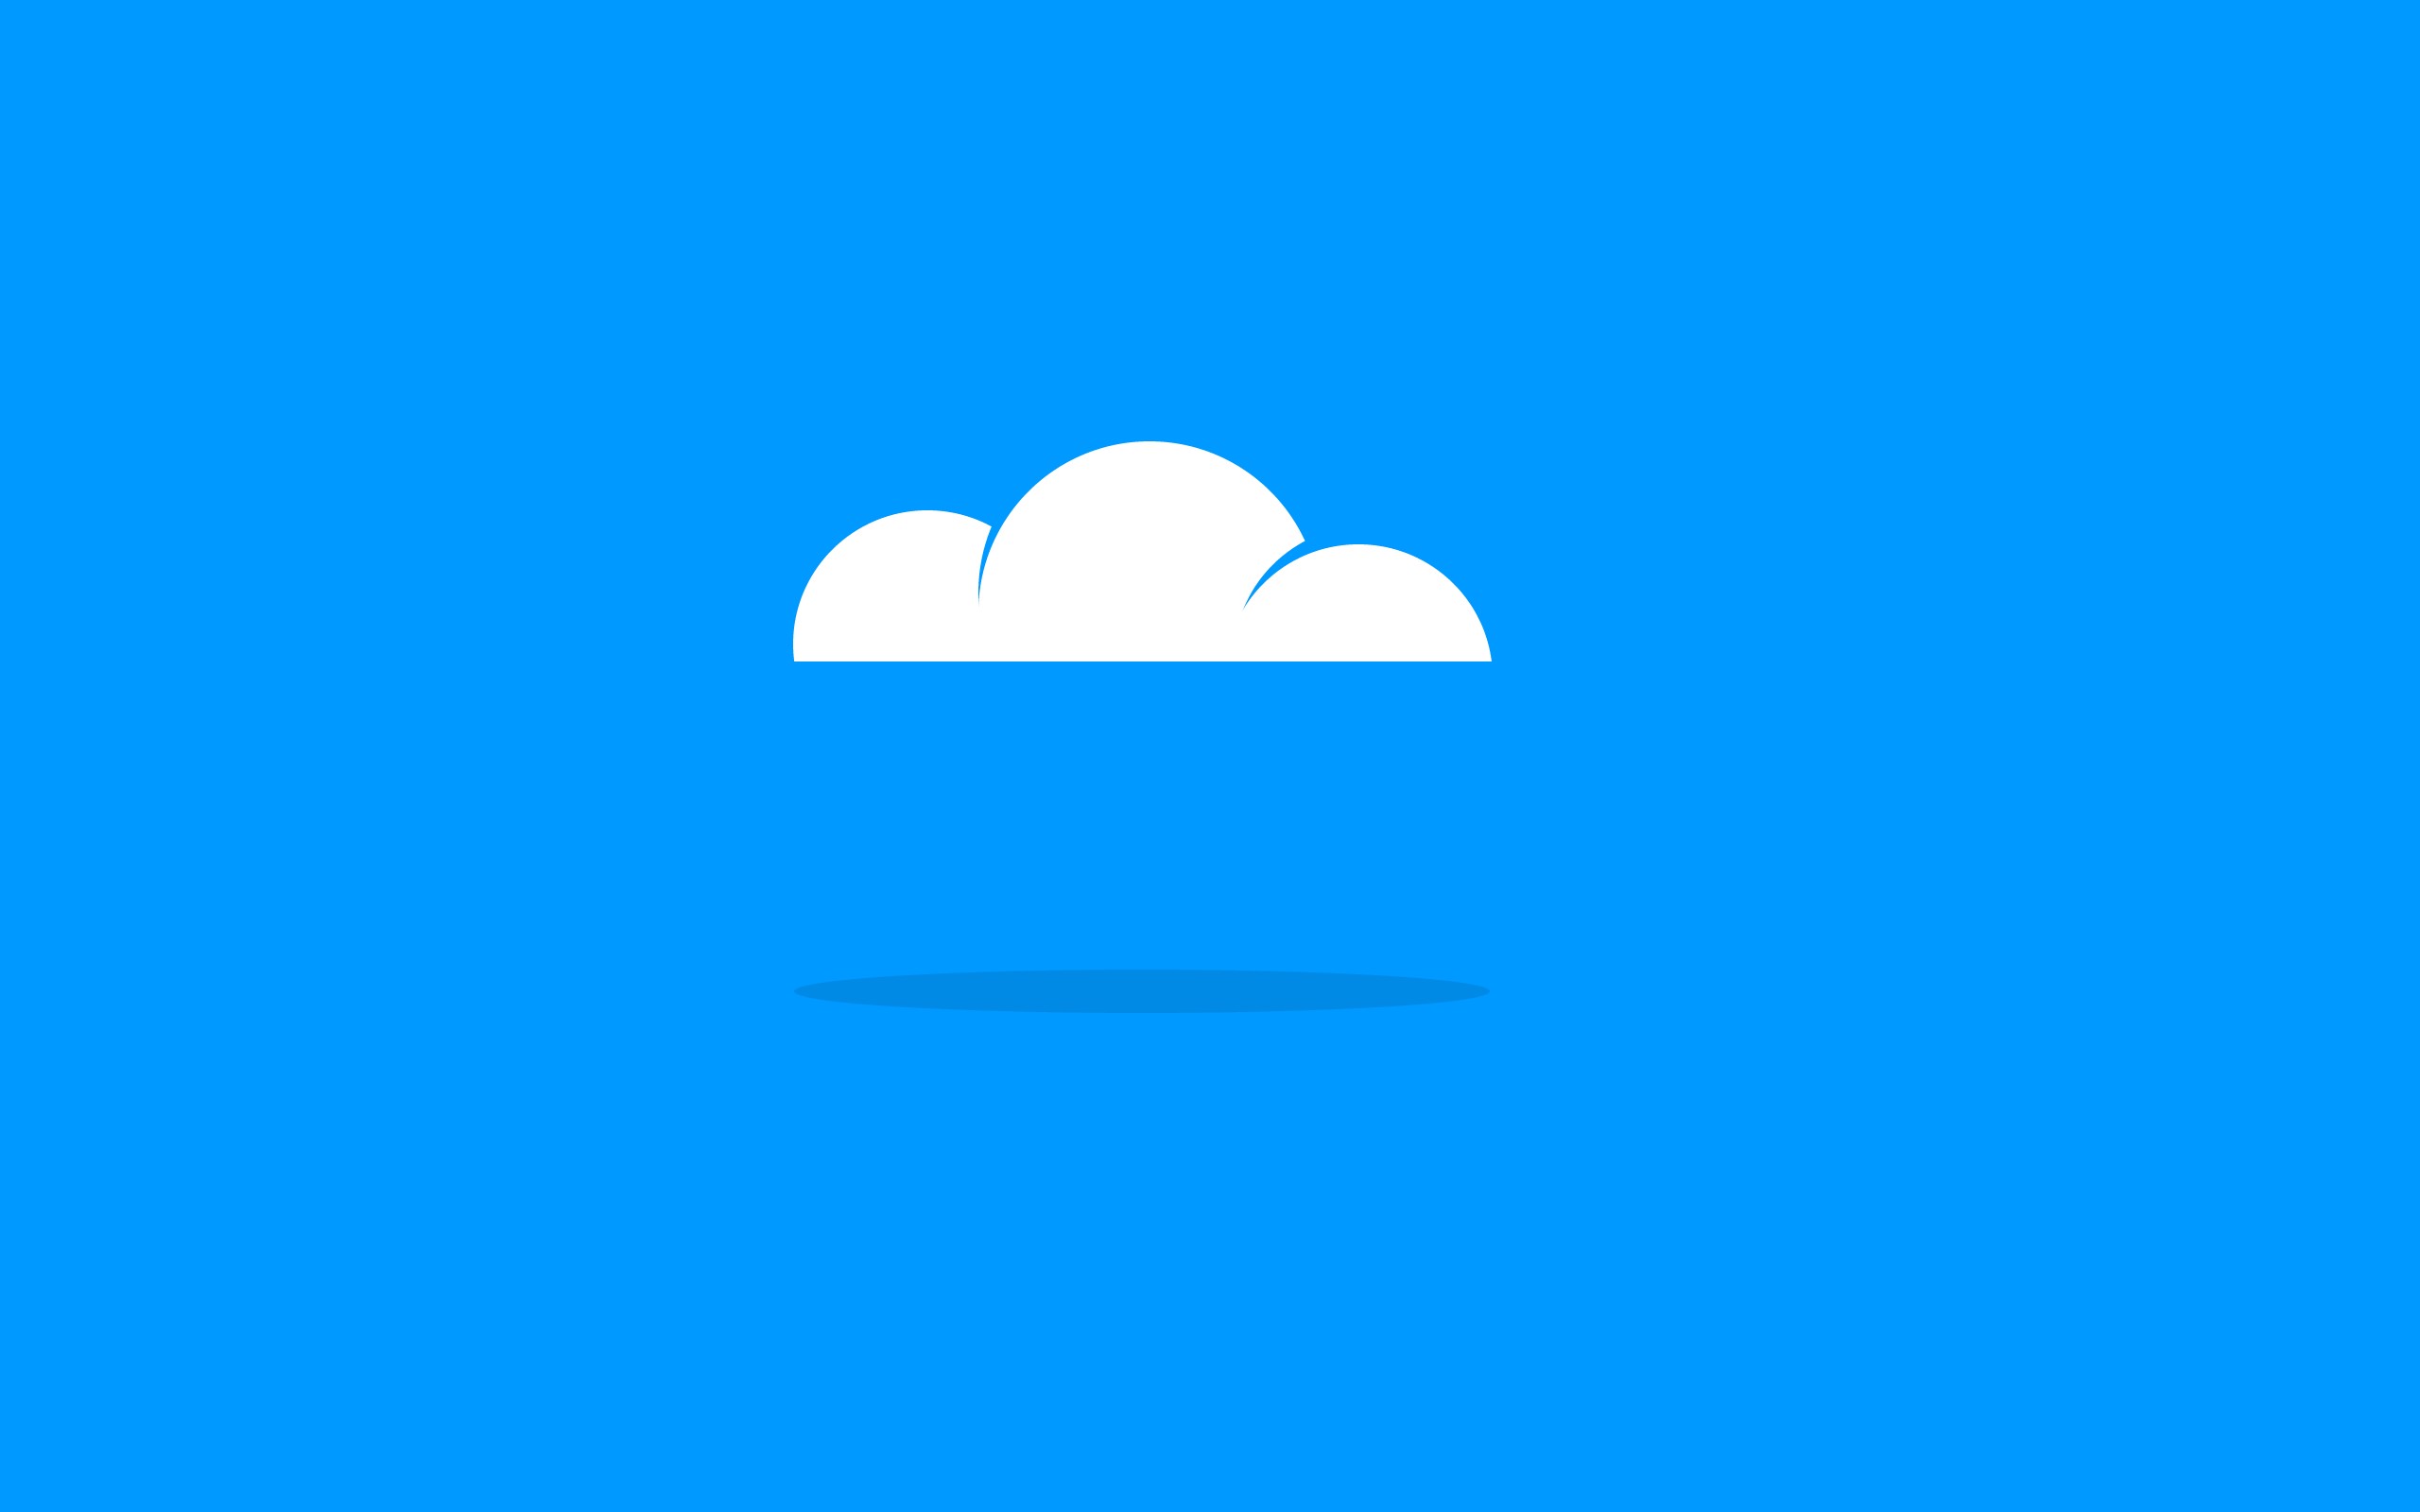 General 2560x1600 minimalism digital art clouds sky blue background simple background artwork